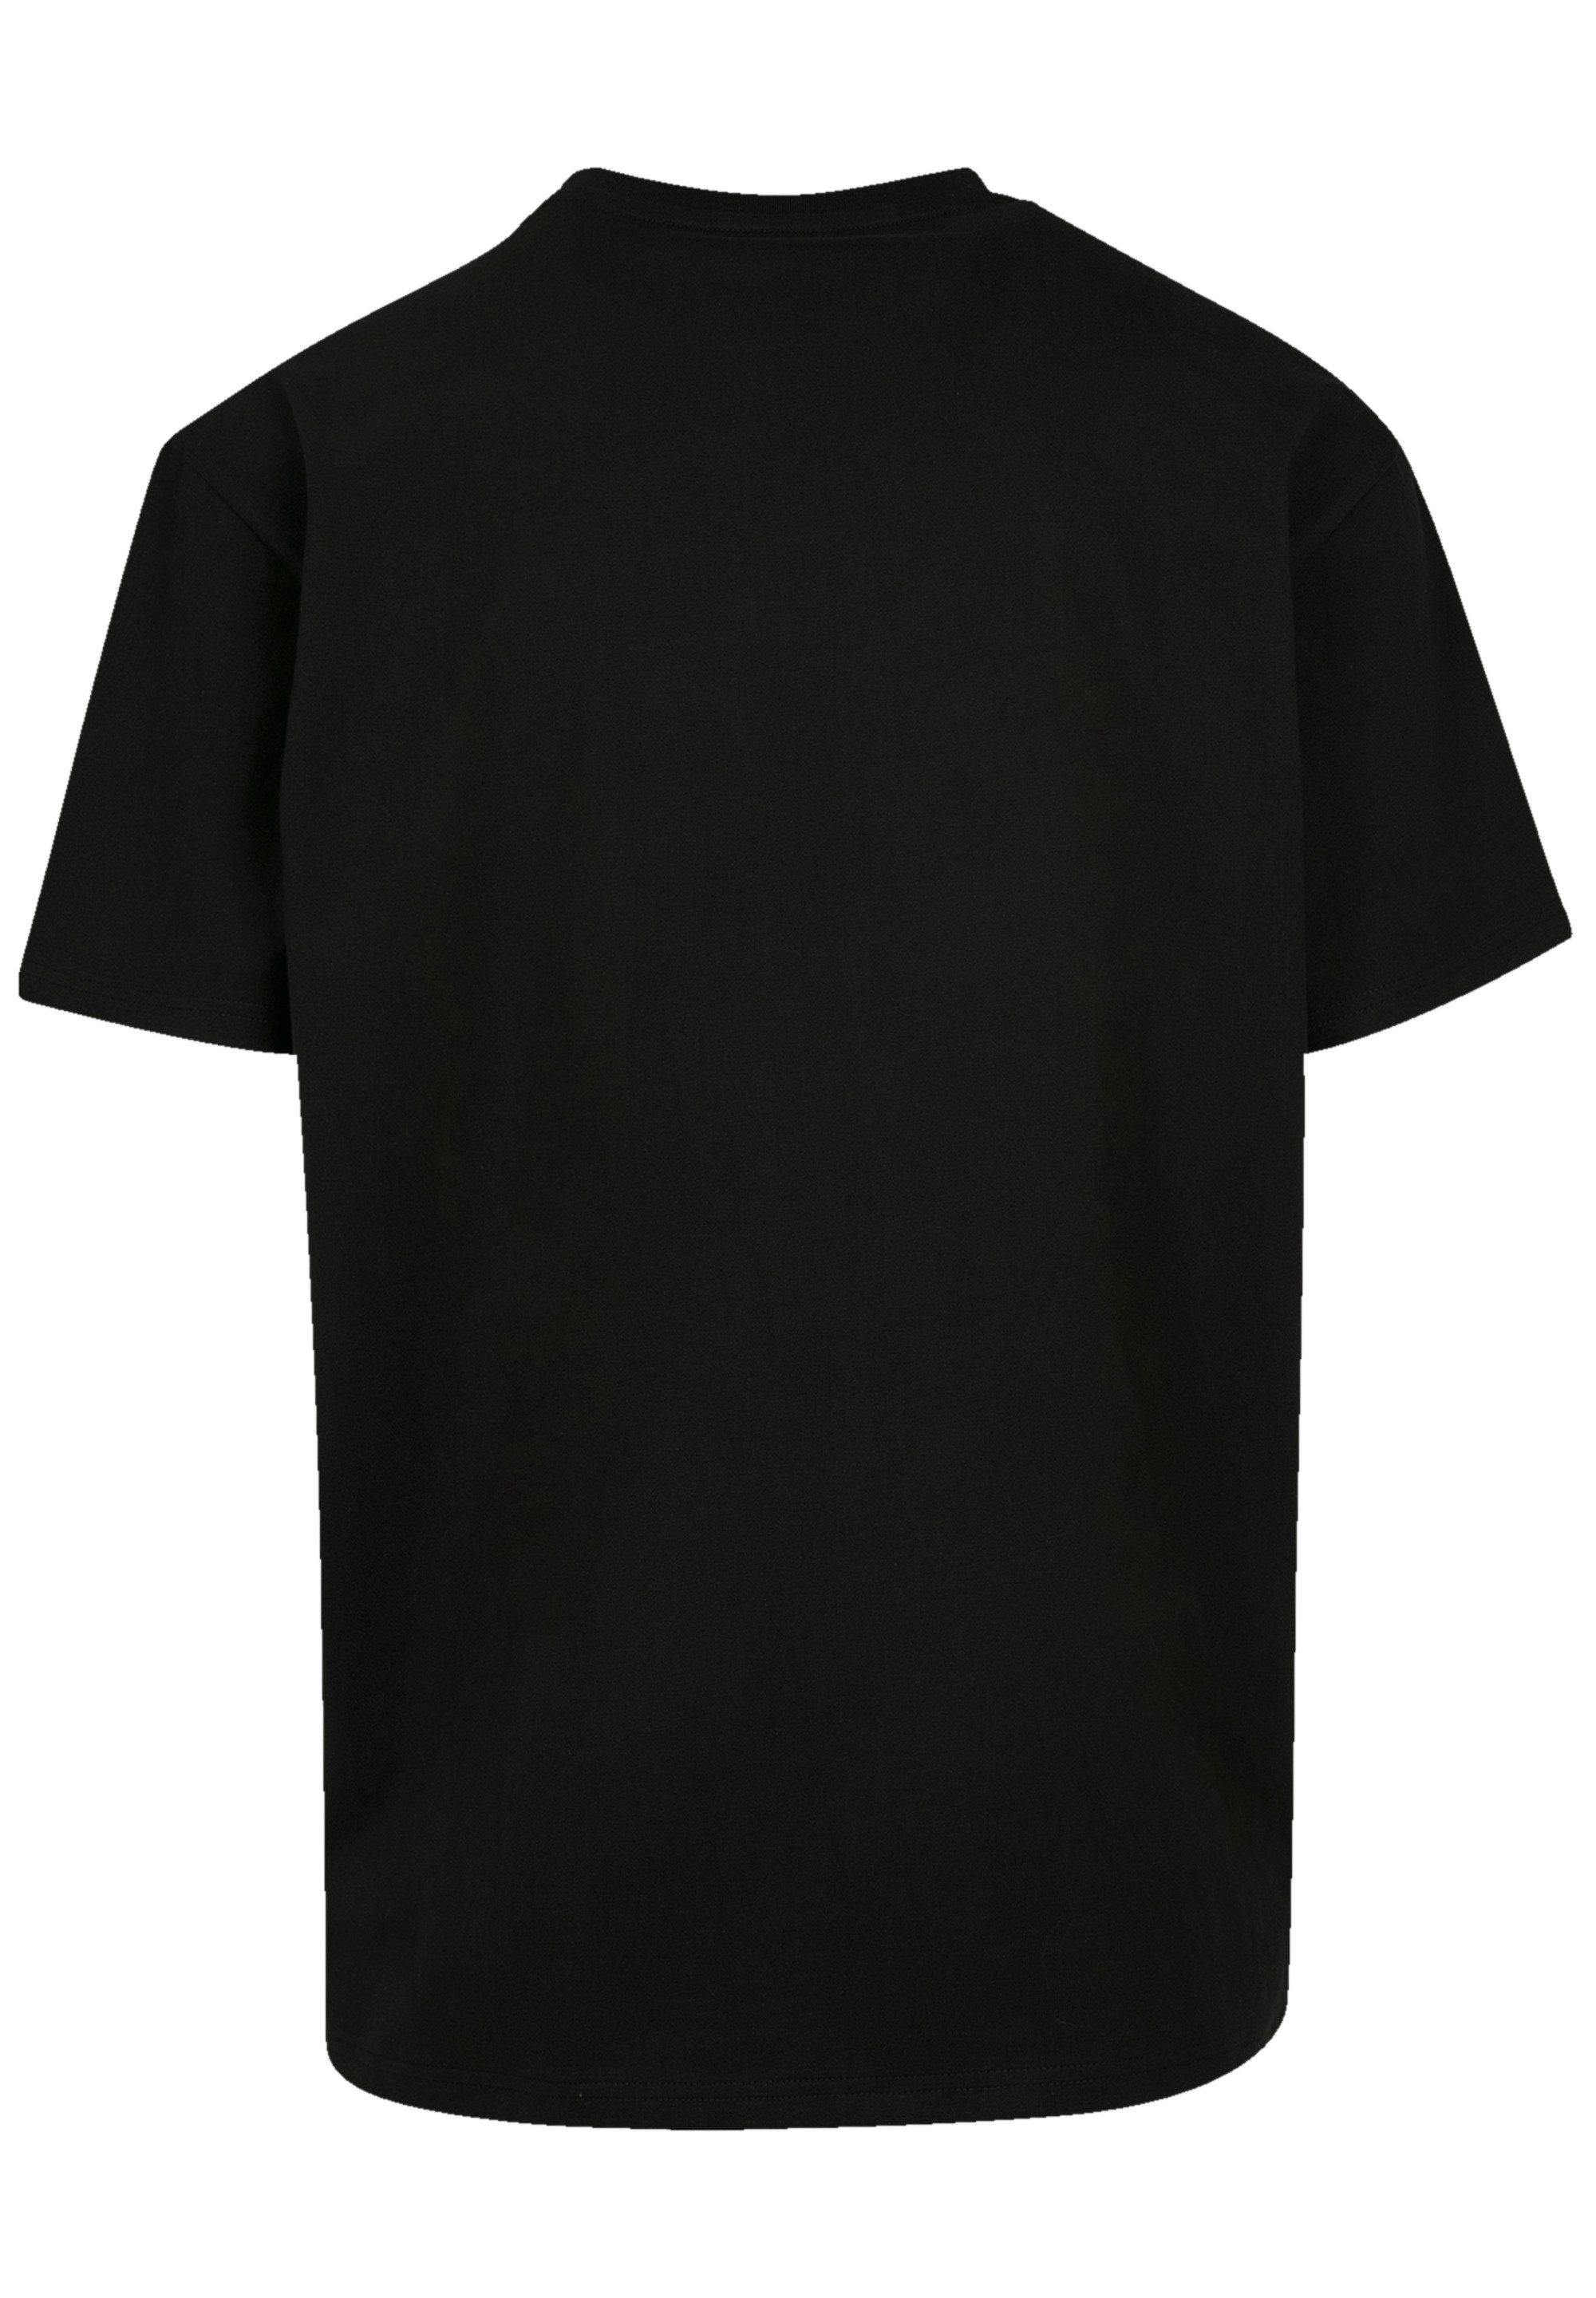 F4NT4STIC T-Shirt Creature Rock-Musik, Heavy Evolving Band Premium Qualität, Metal Disturbed schwarz